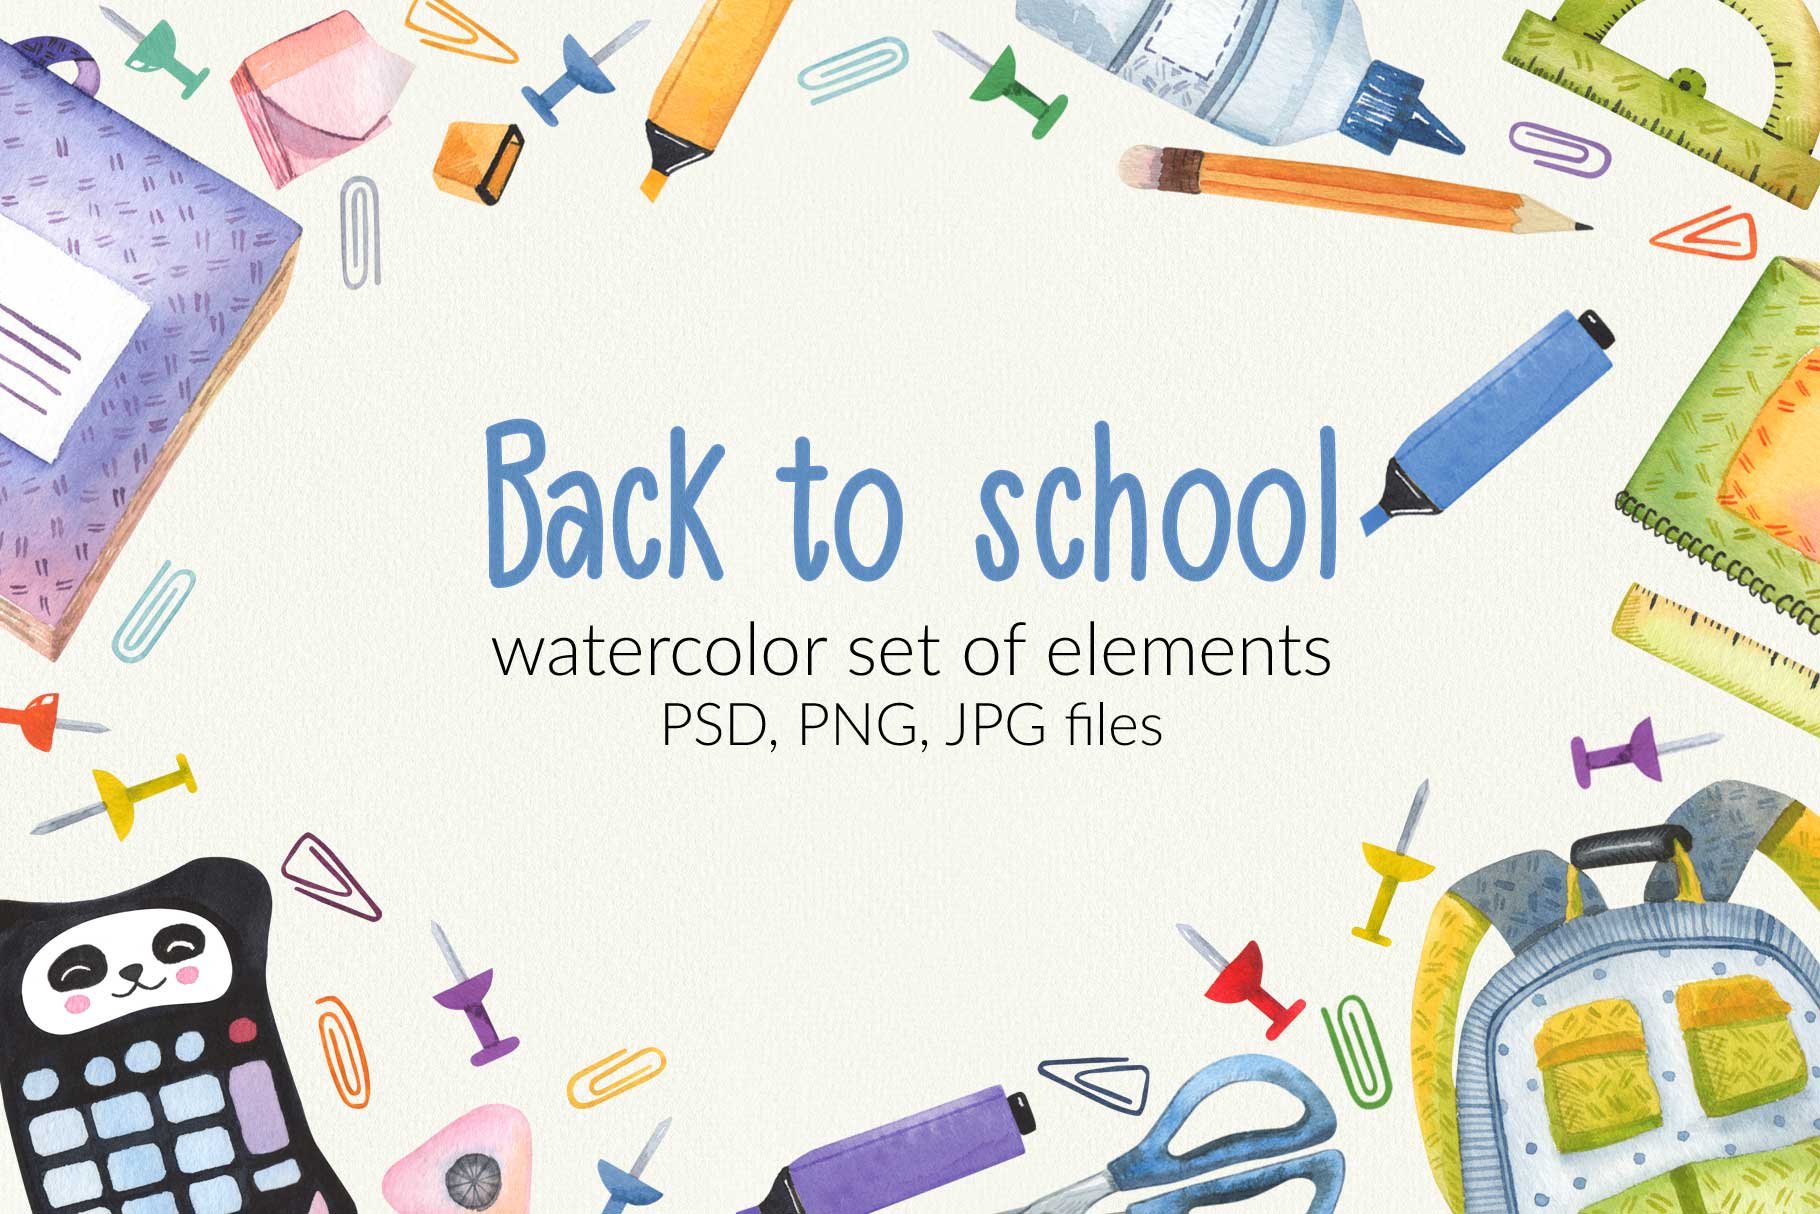 Watercolor school set cover image.